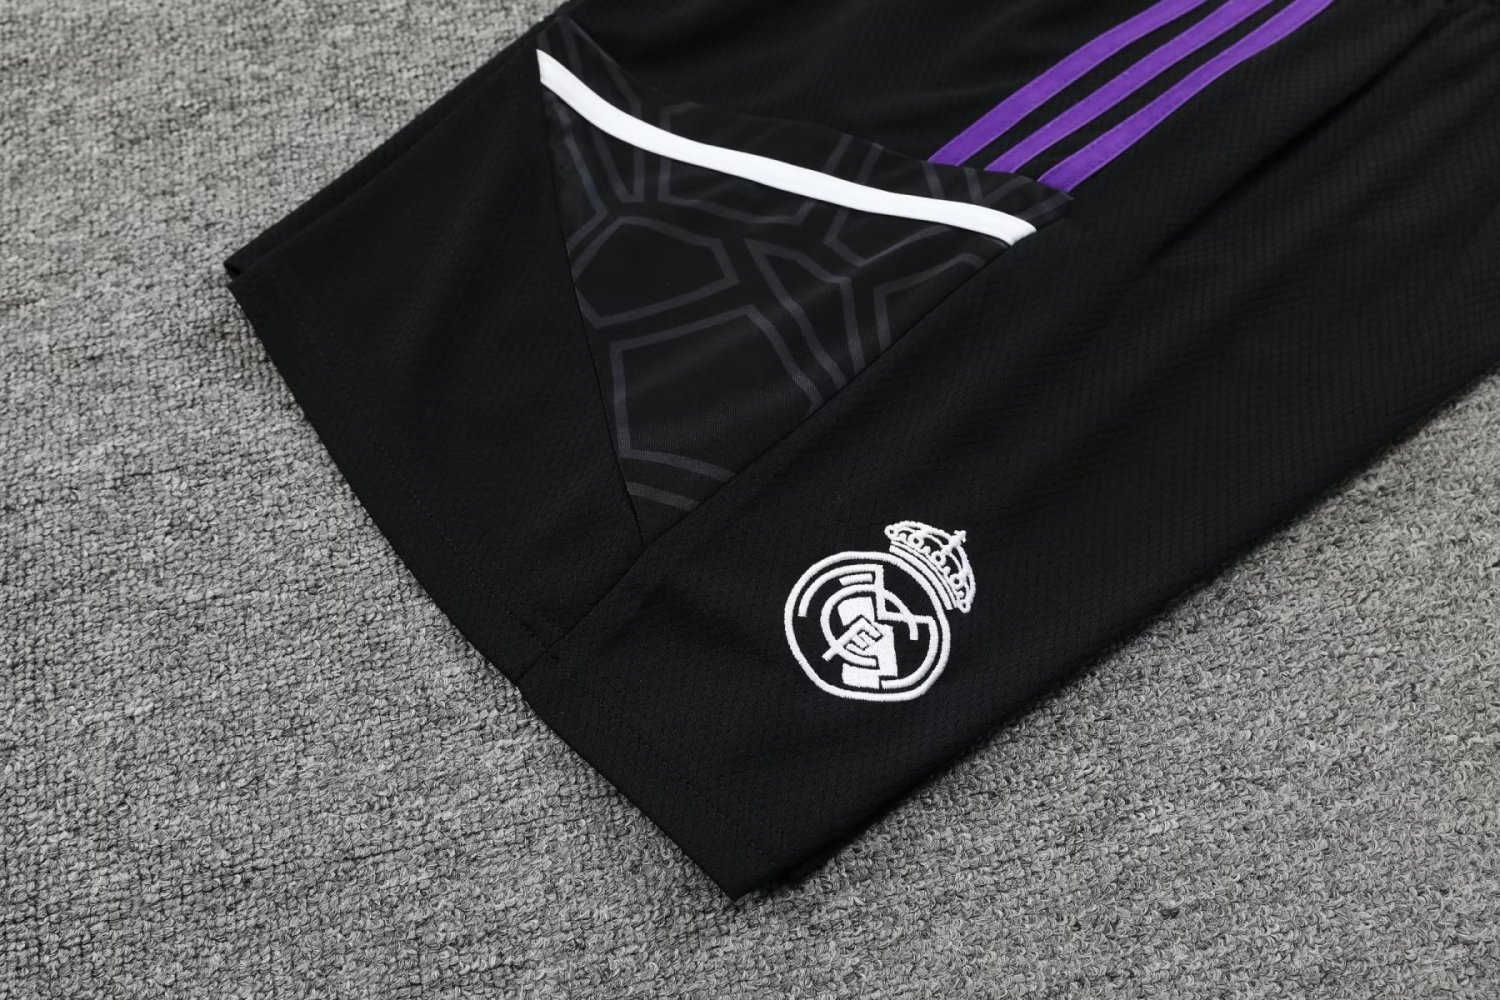 Real Madrid Soccer Jersey + Short Replica Green - Purple 2023/24 Mens